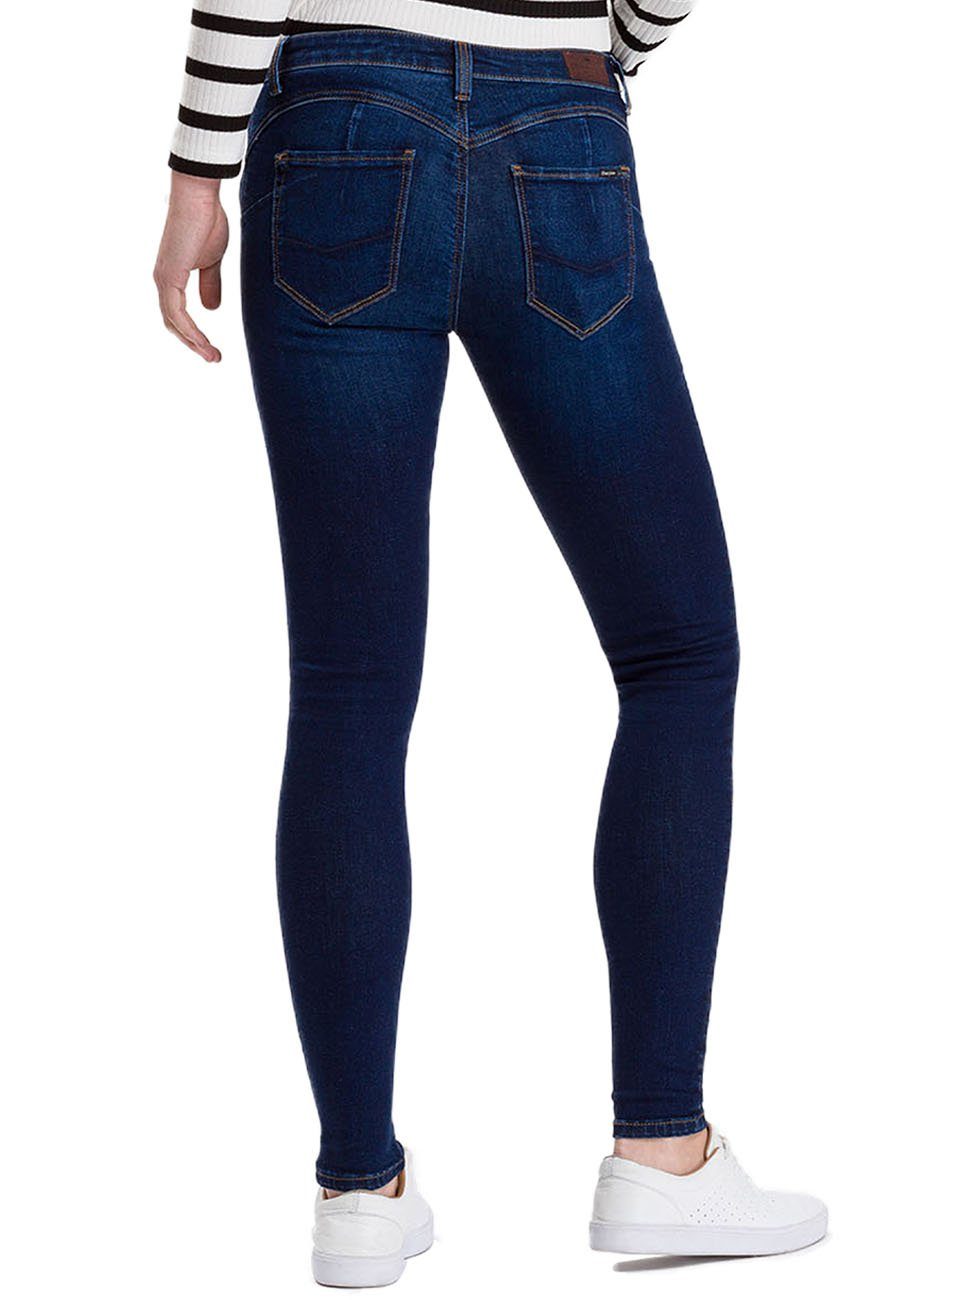 CROSS JEANS® Jeanshose Stretch Page Skinny-fit-Jeans mit